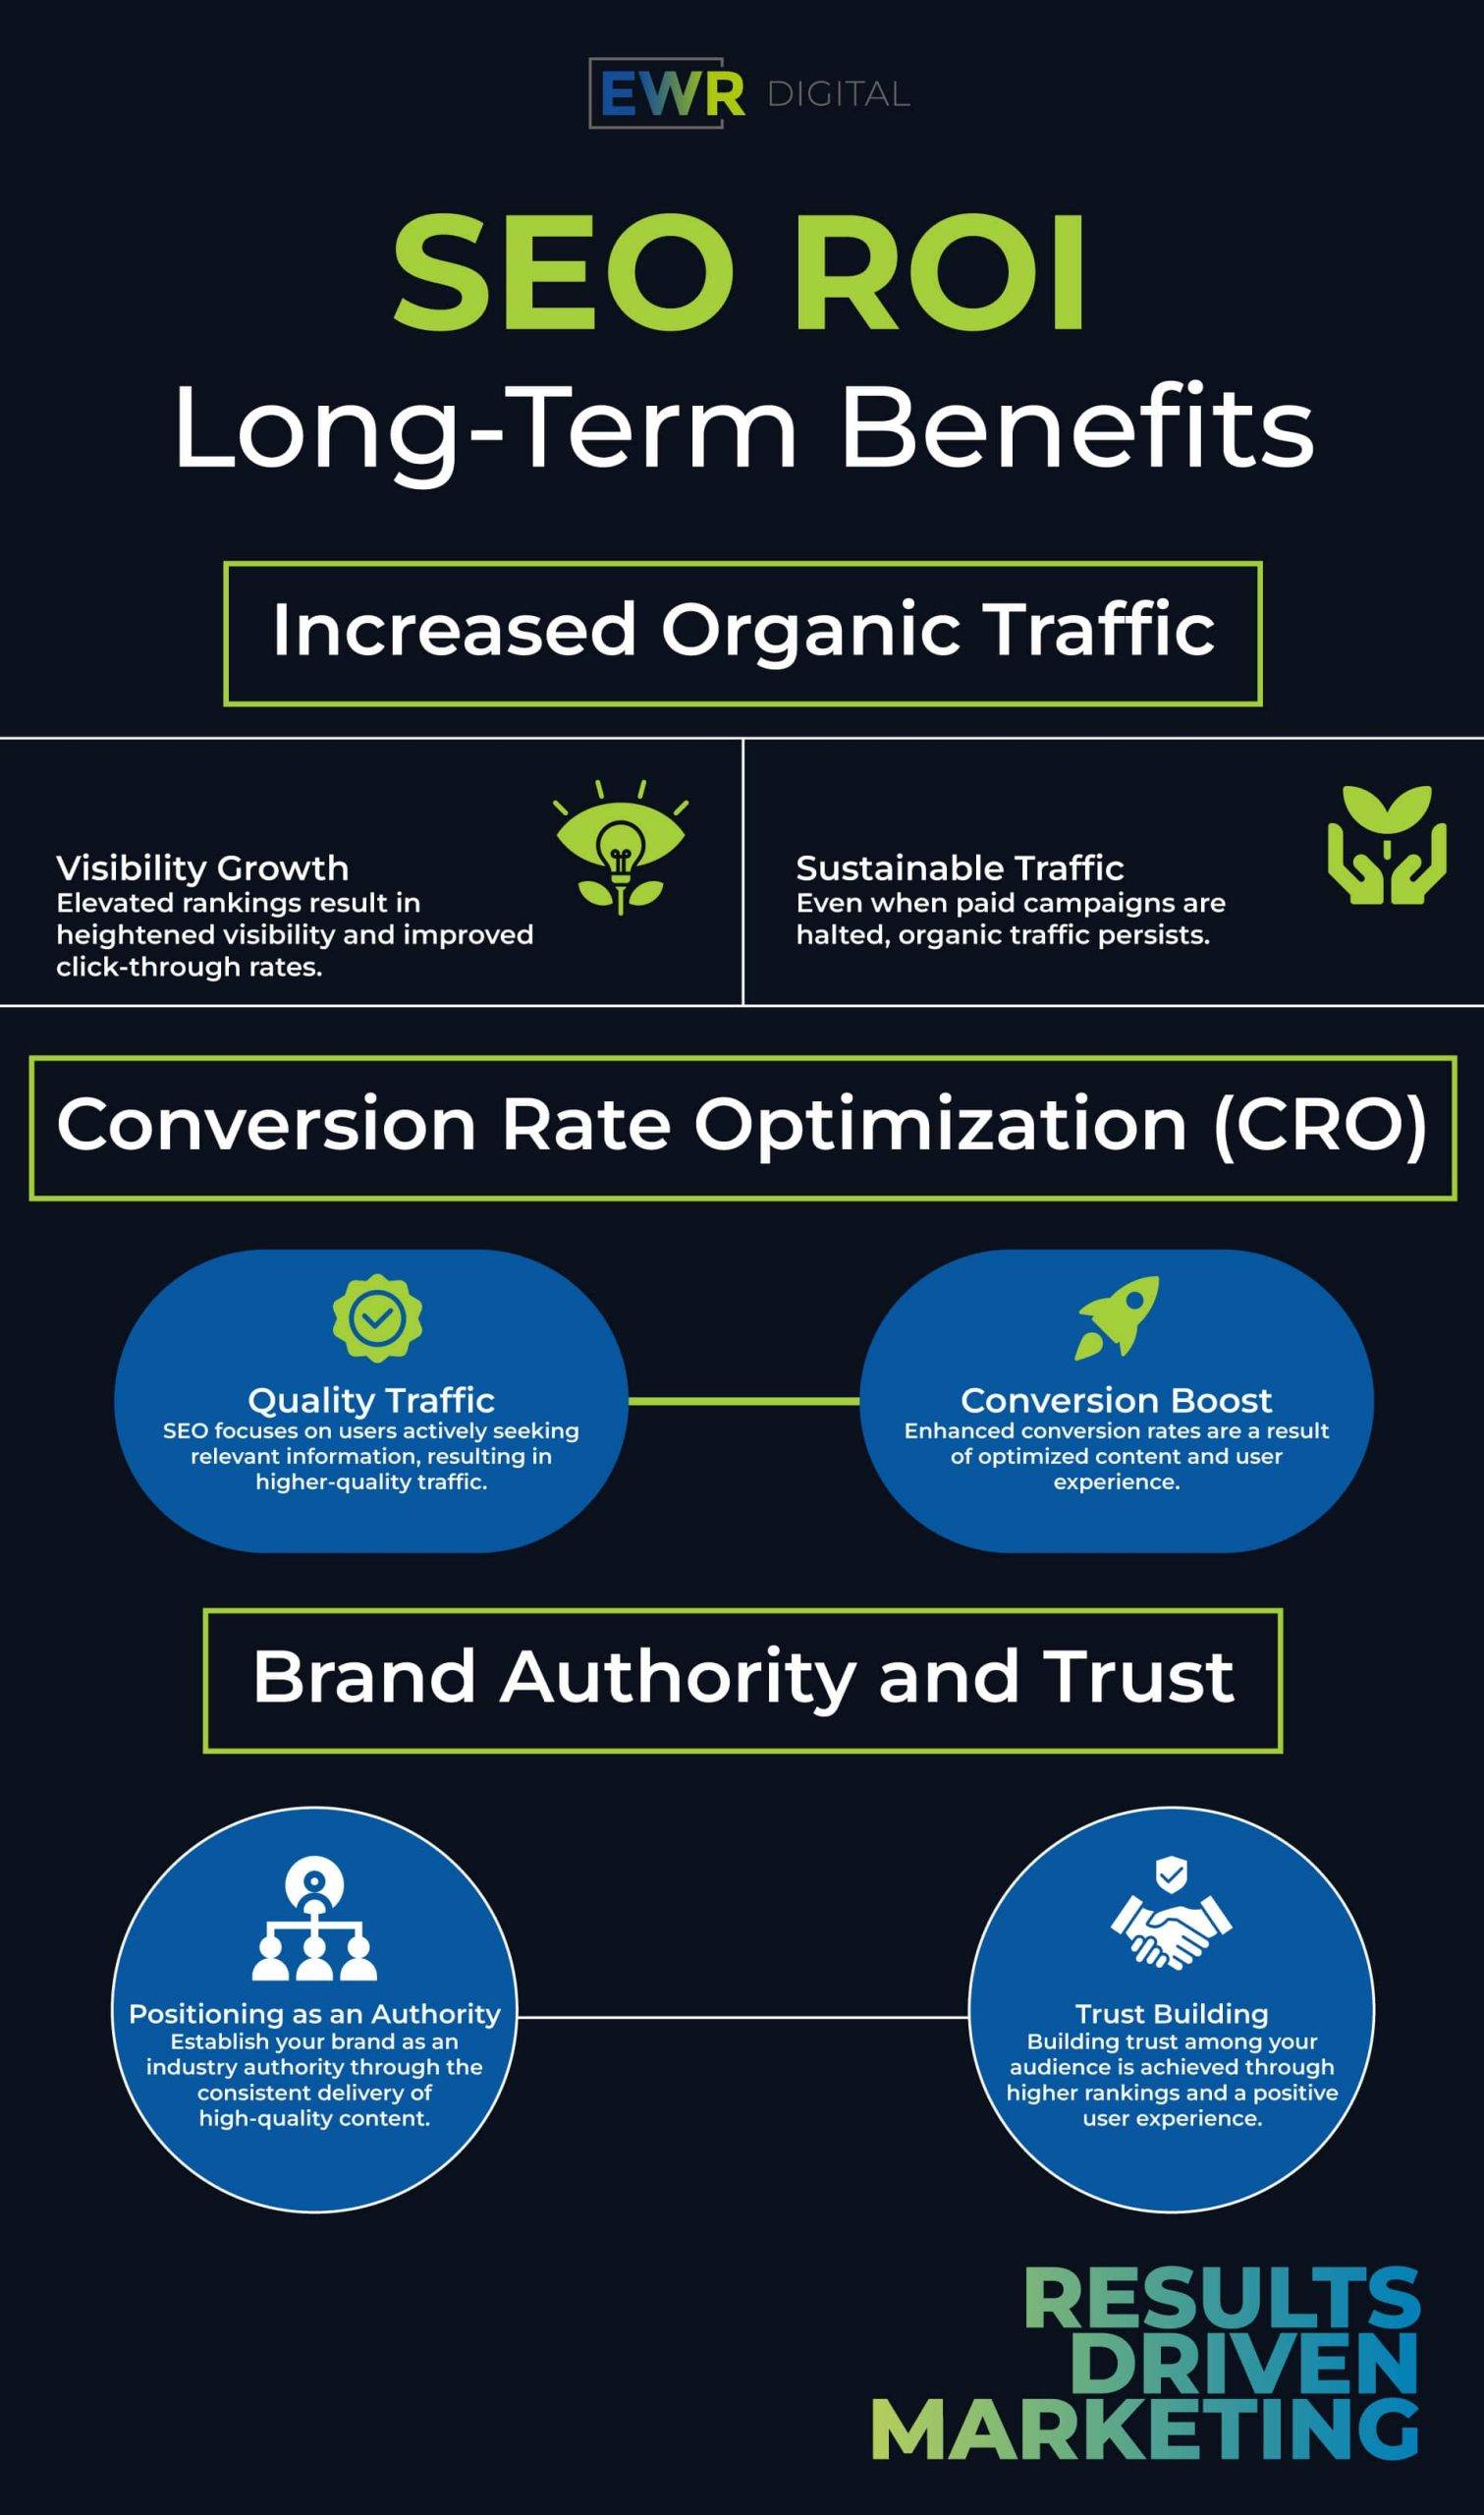 seo roi, long-term benefits, increased organic traffic, CRO, brand authority, trust